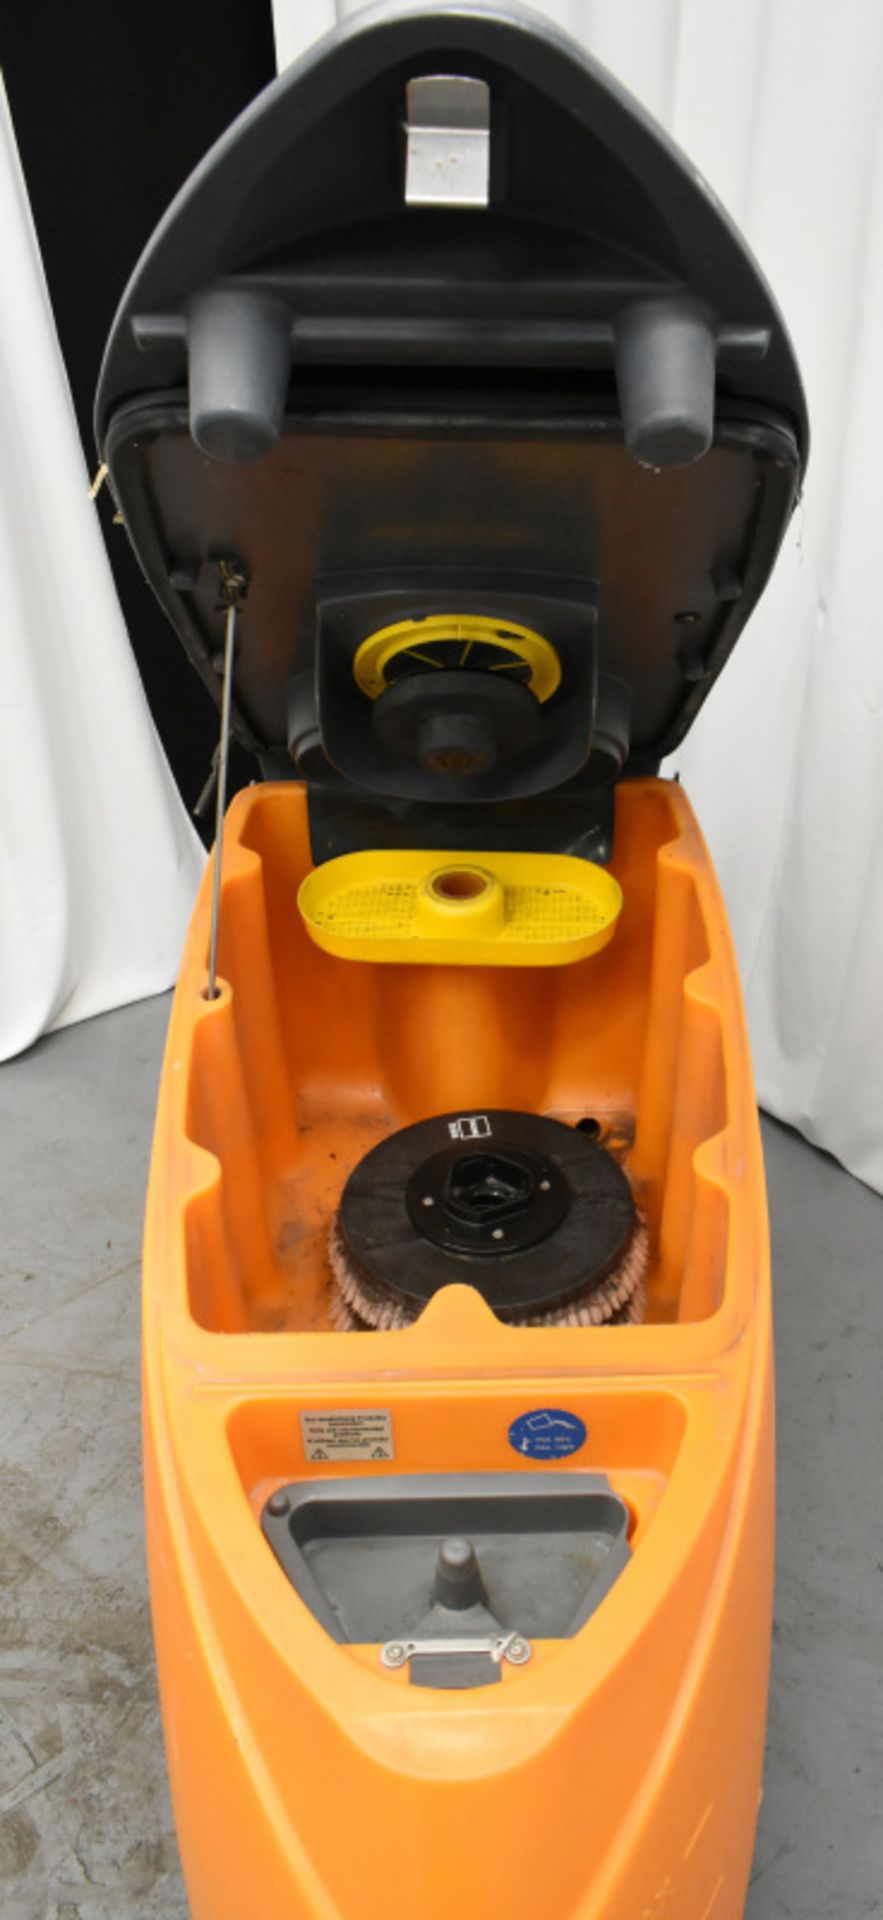 Taski Swingo 1650 Floor Scrubber Dryer, comes with key, starts and runs - Image 5 of 6